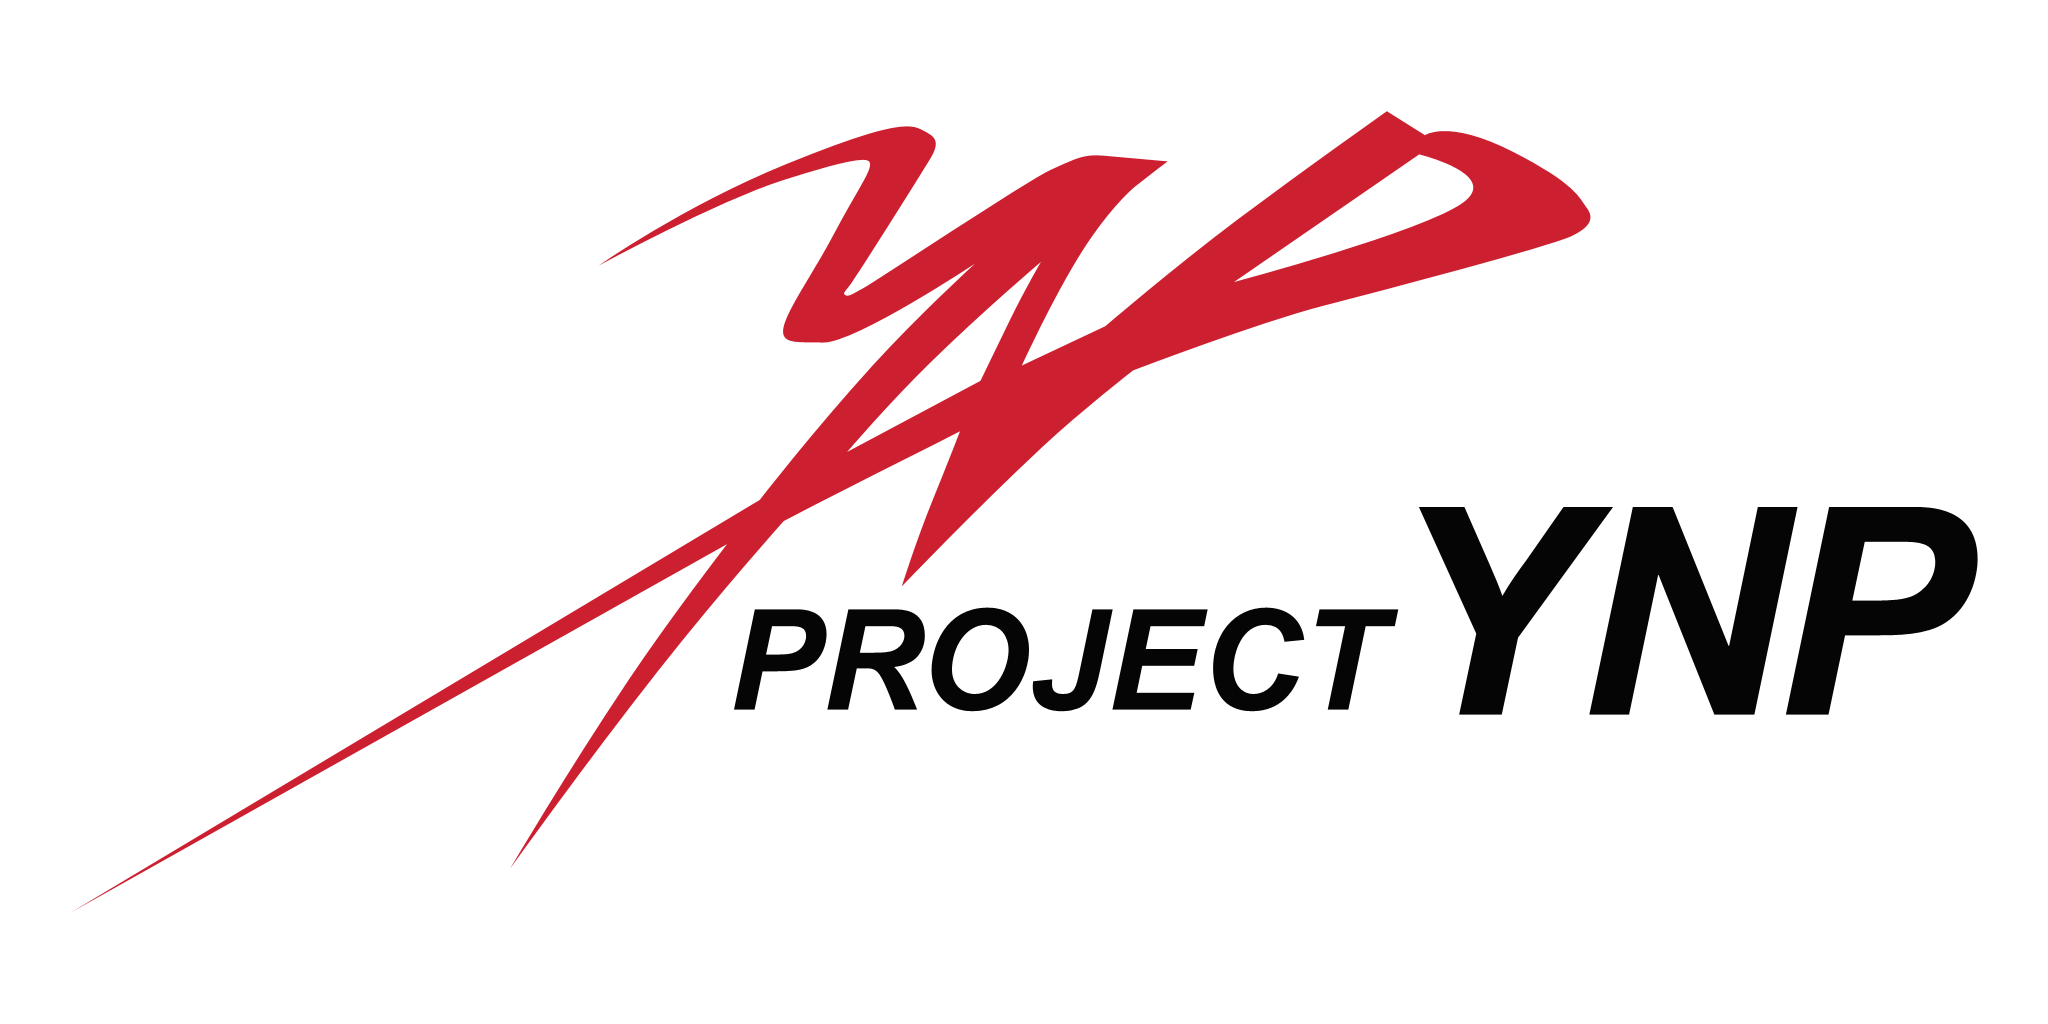 (c) Project-ynp.com